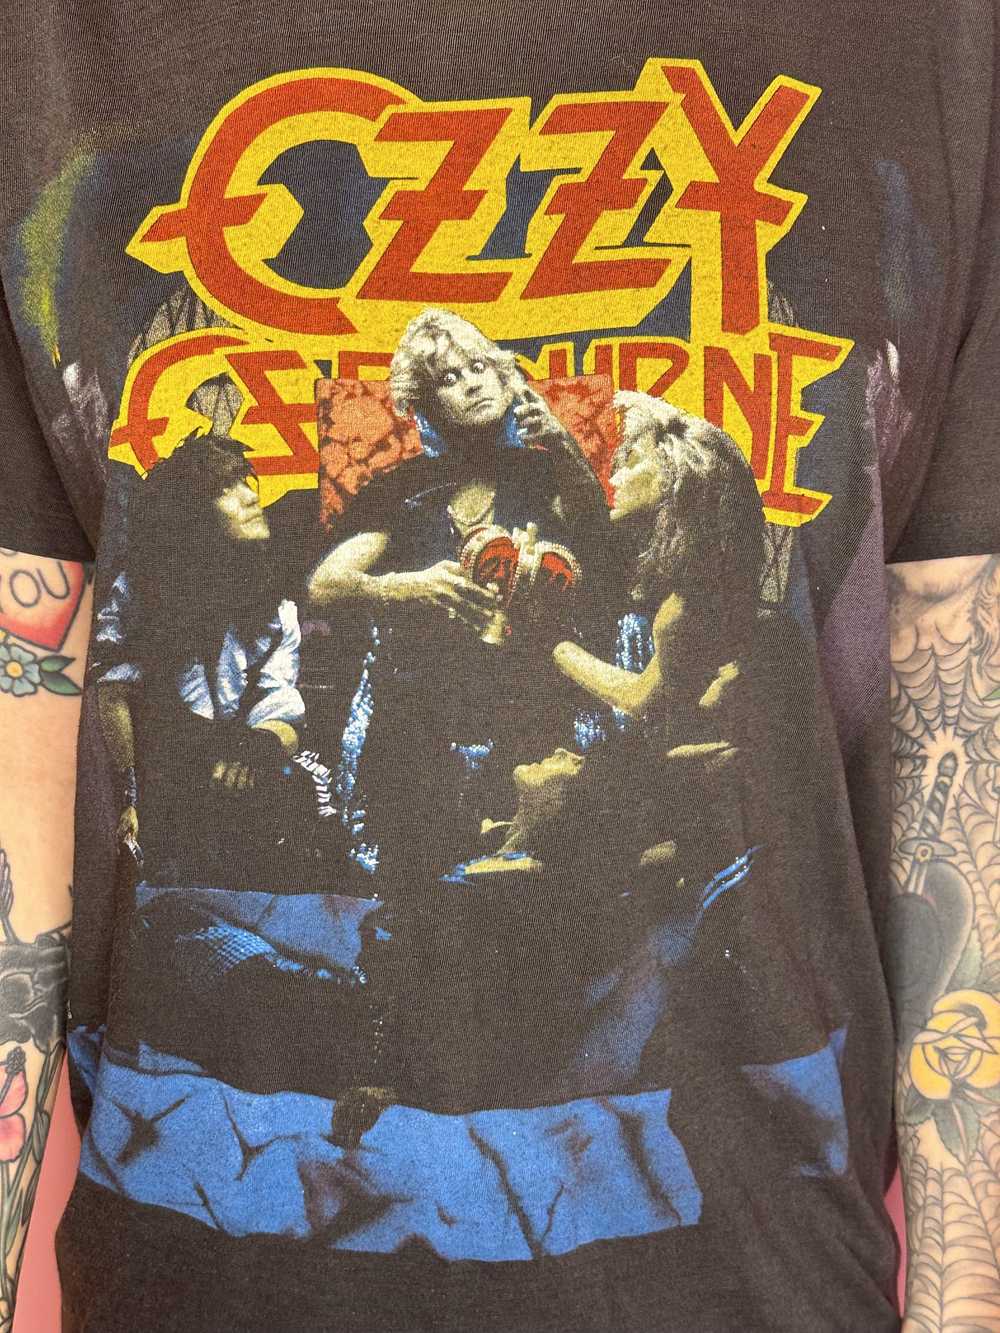 Band Tees Ozzy Osbourne 1984 Tour shirt - image 3